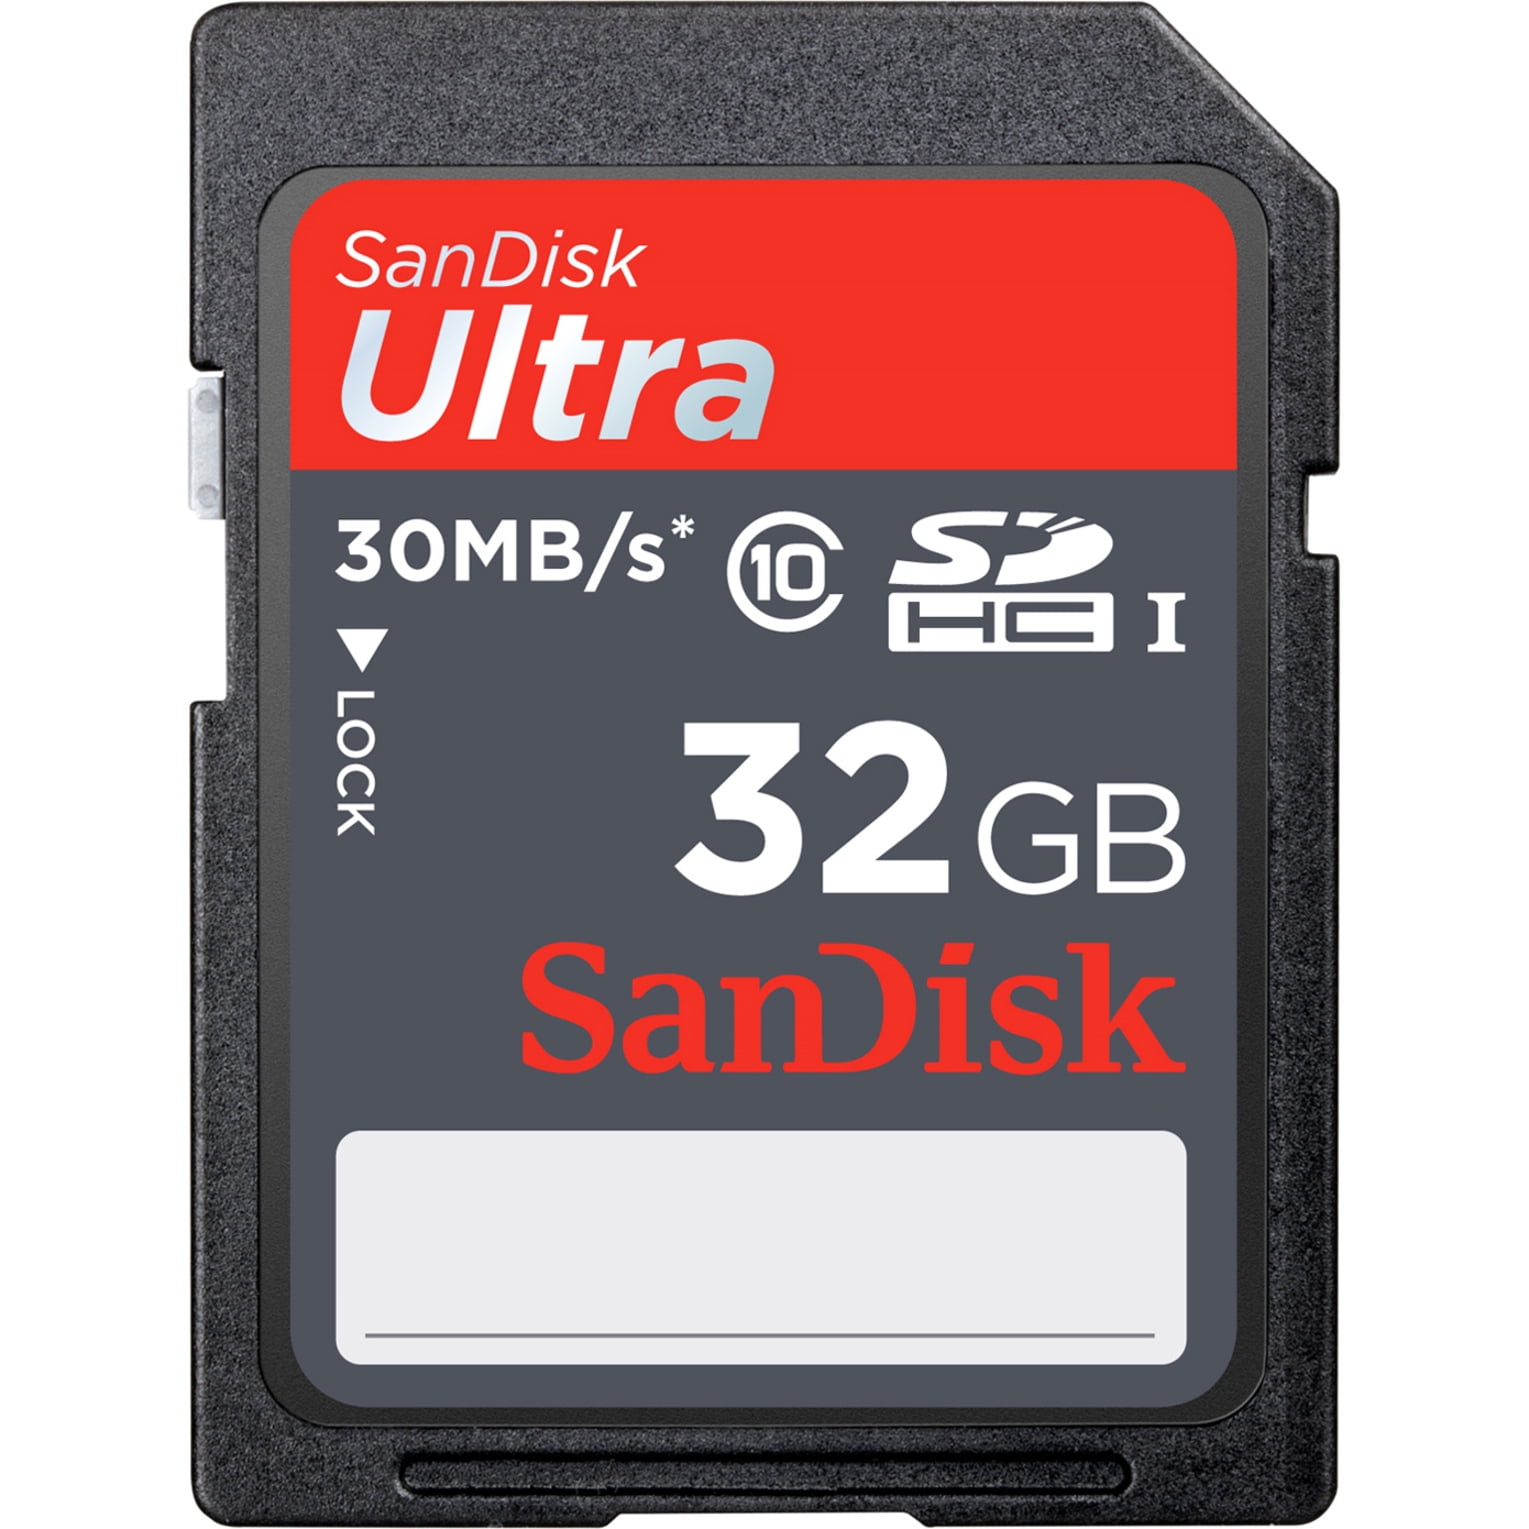 Sandisk Ultra SDHC 32GB 80MB/S C10 Flash Memory Card SDSDUNC-032G-AN6IN 